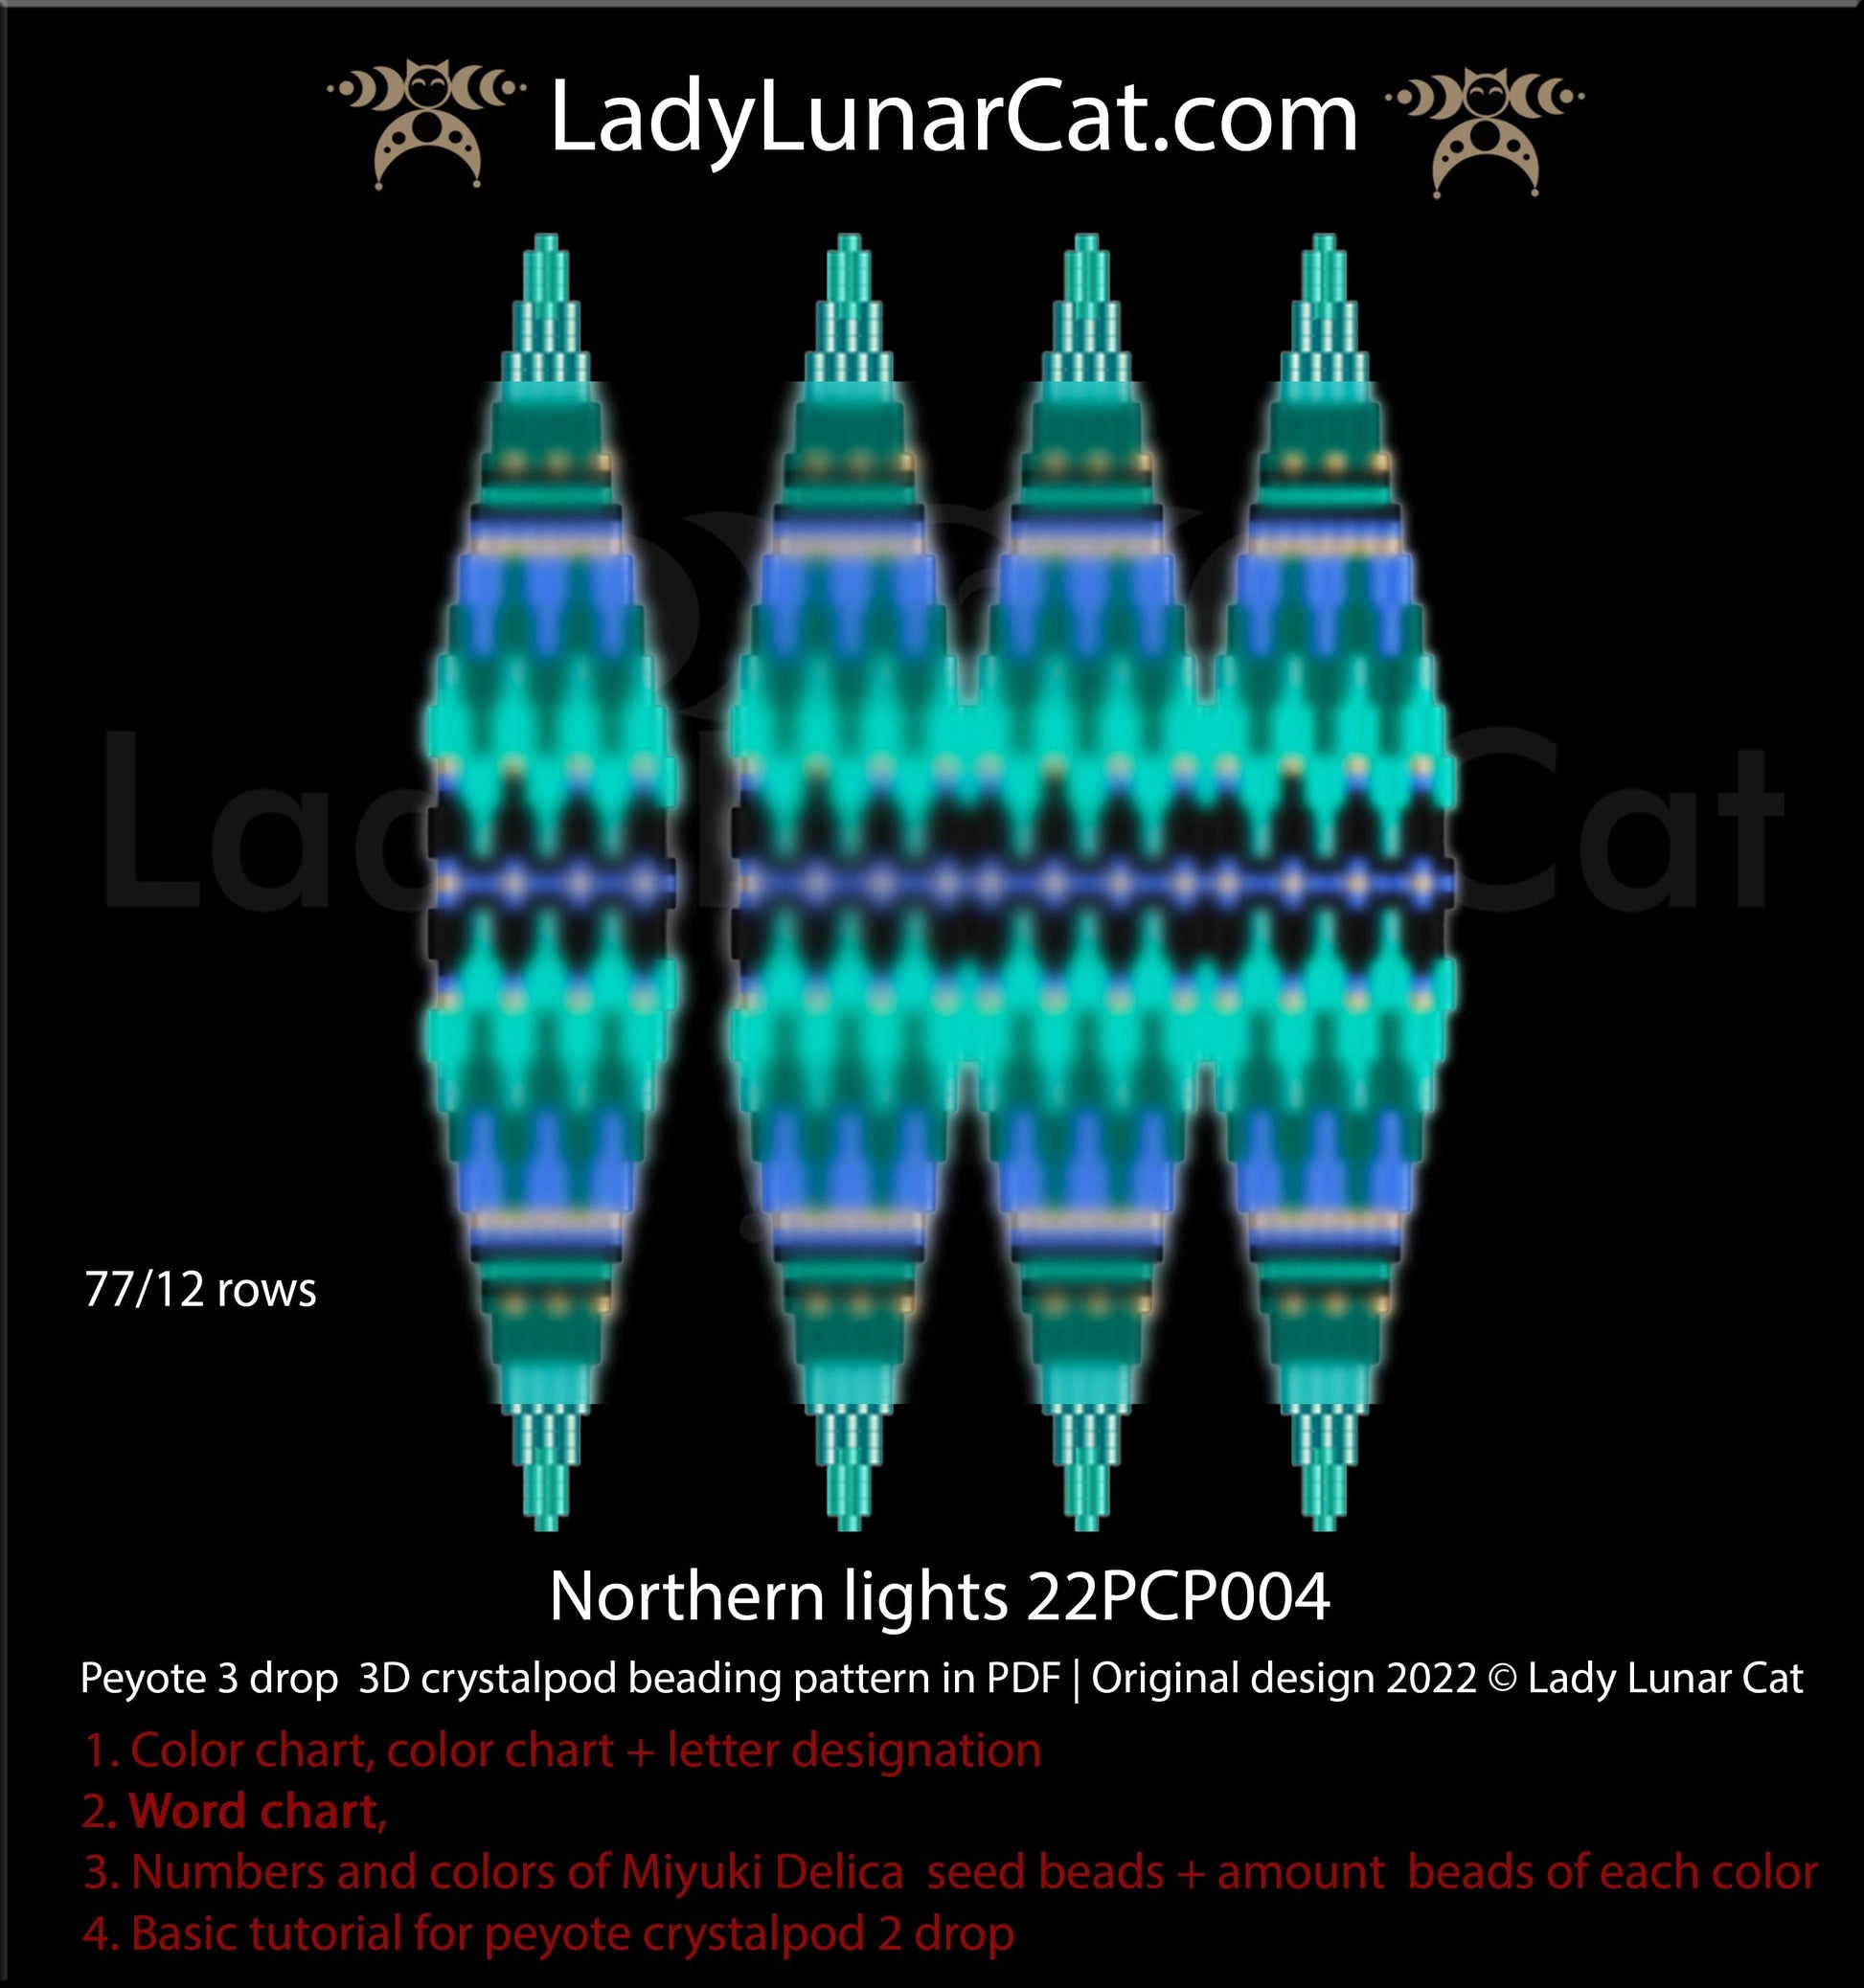 Peyote 3drop pod pattern or crystalpod pattern for beading  Northern lights 22PCP004 LadyLunarCat